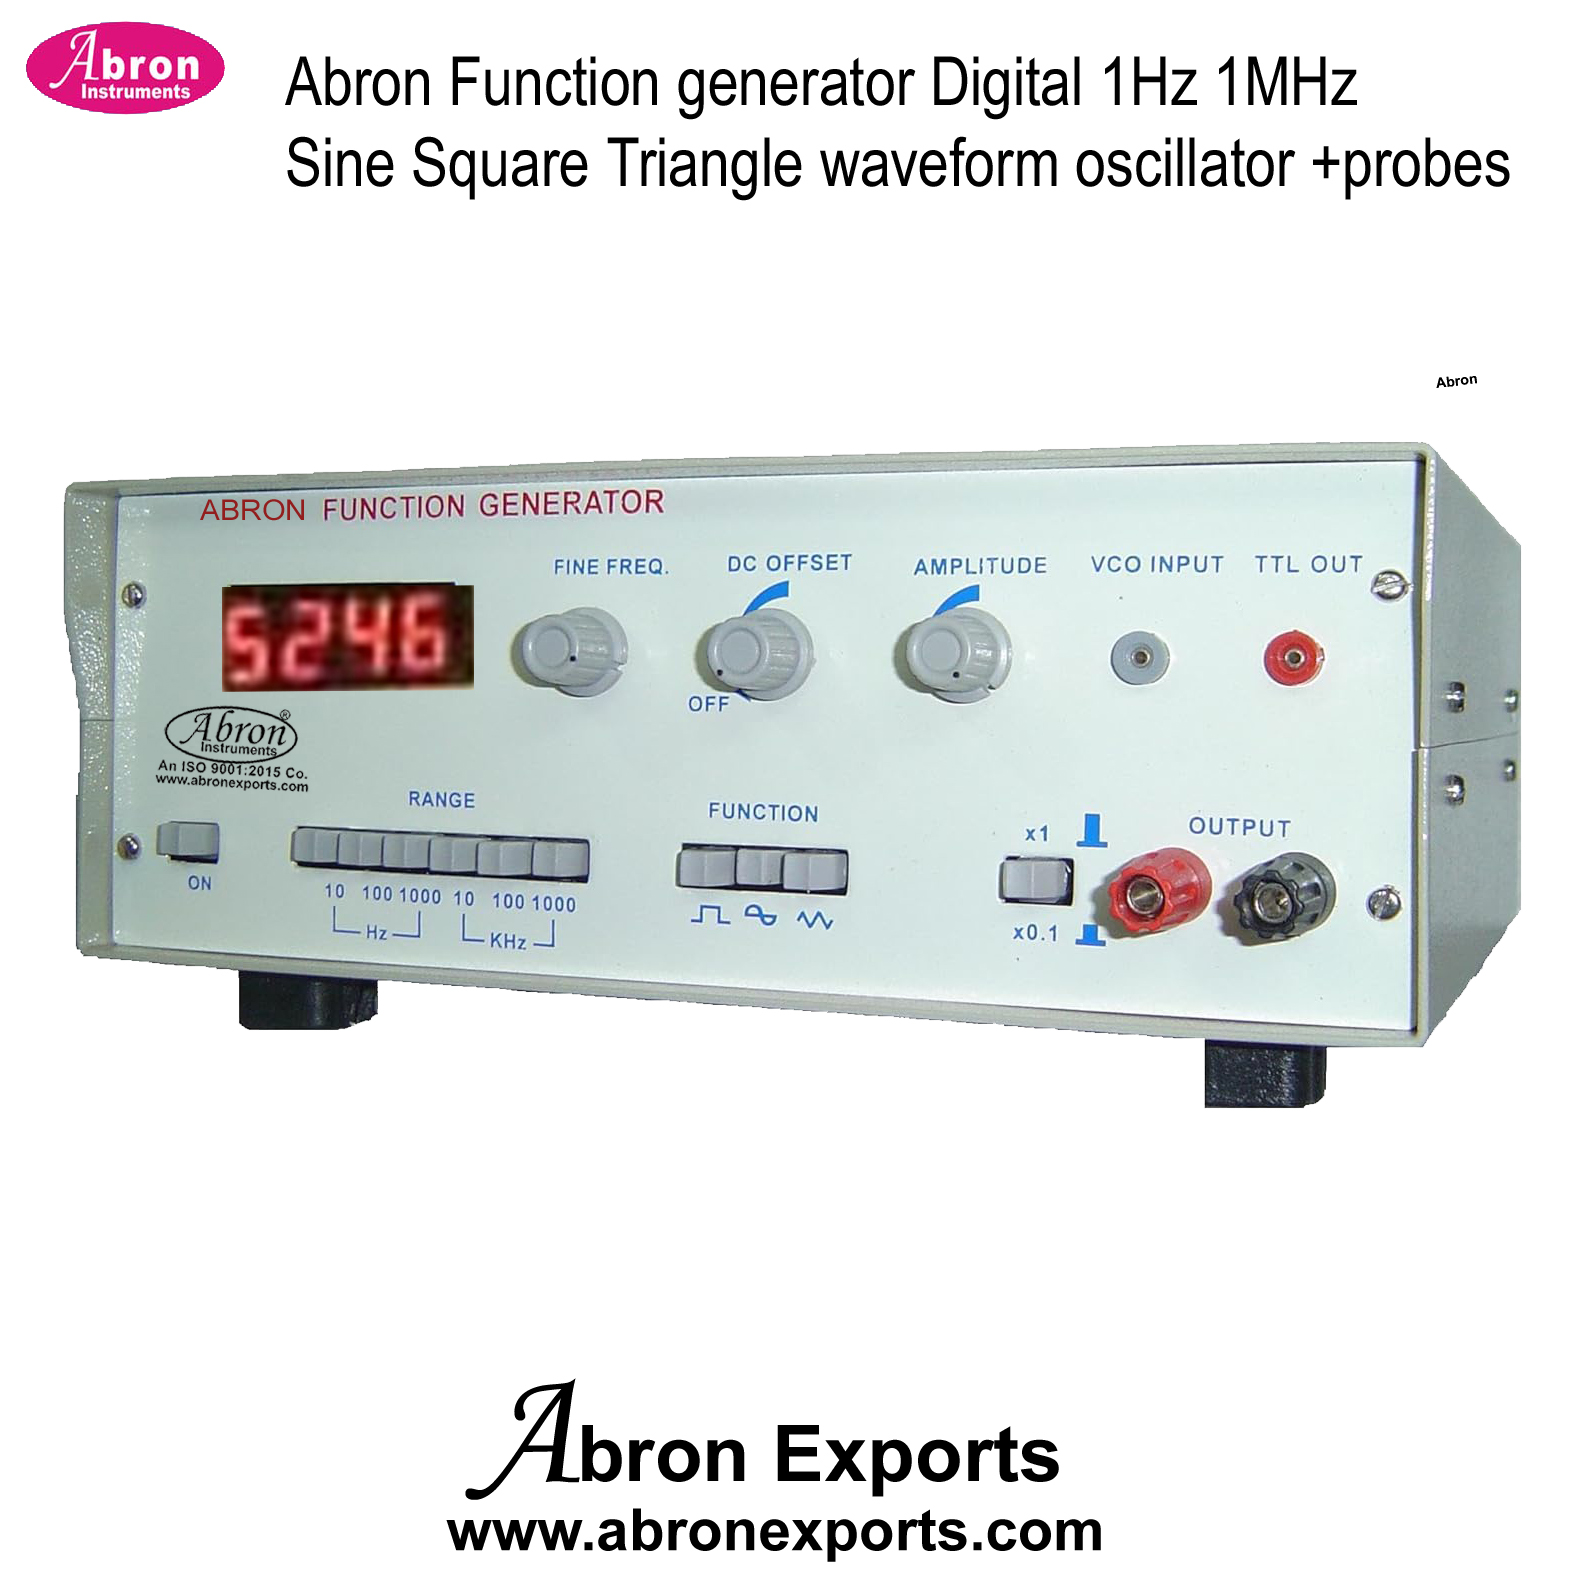 Function generator Digital 1Hz 1MHz Sine Square Triangle waveform oscillator with probes Abron AE-1353B1MD 